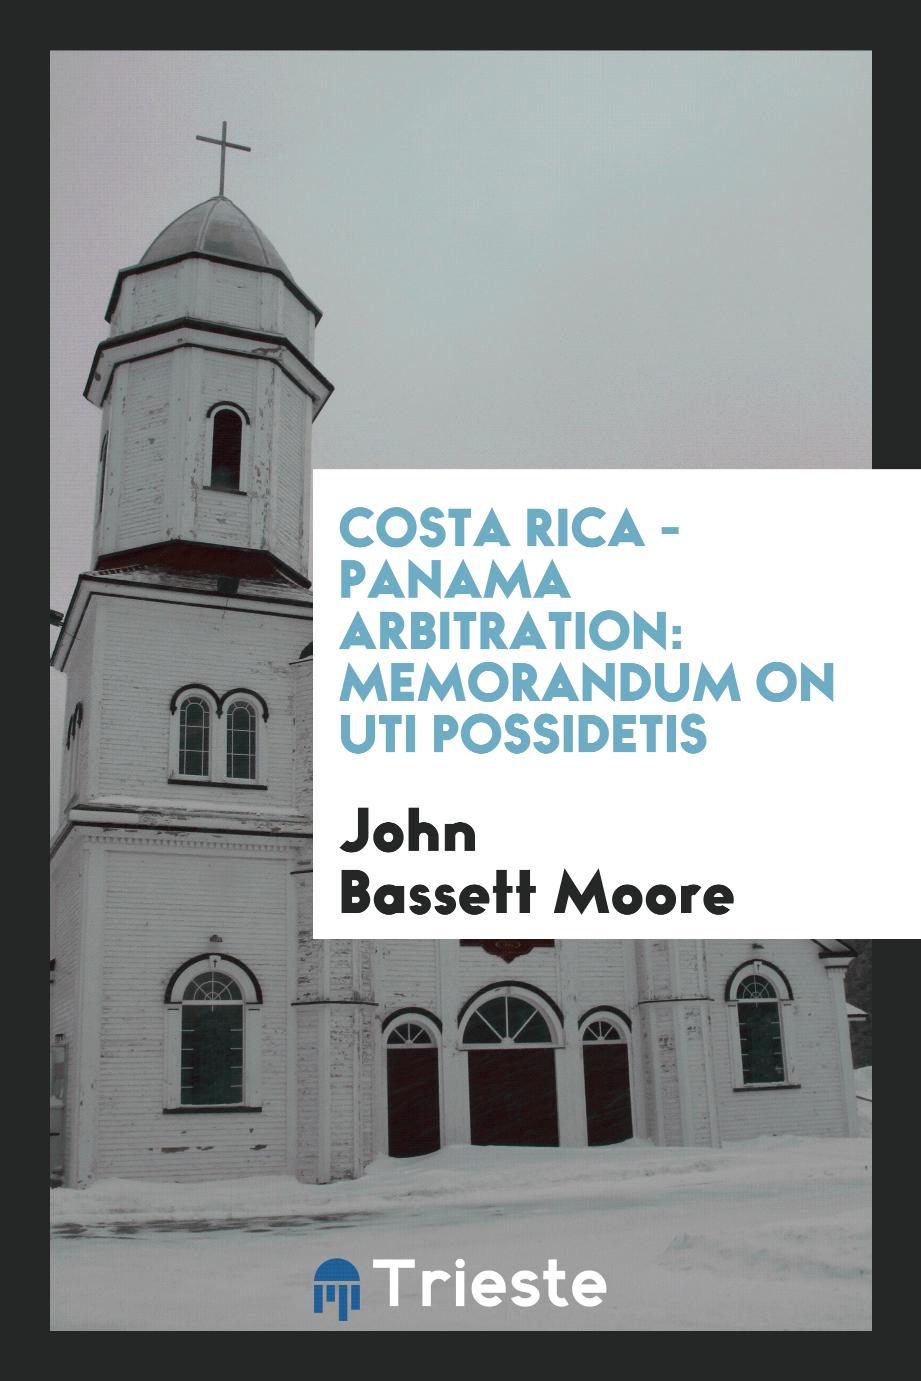 Costa Rica - Panama Arbitration: Memorandum on Uti Possidetis